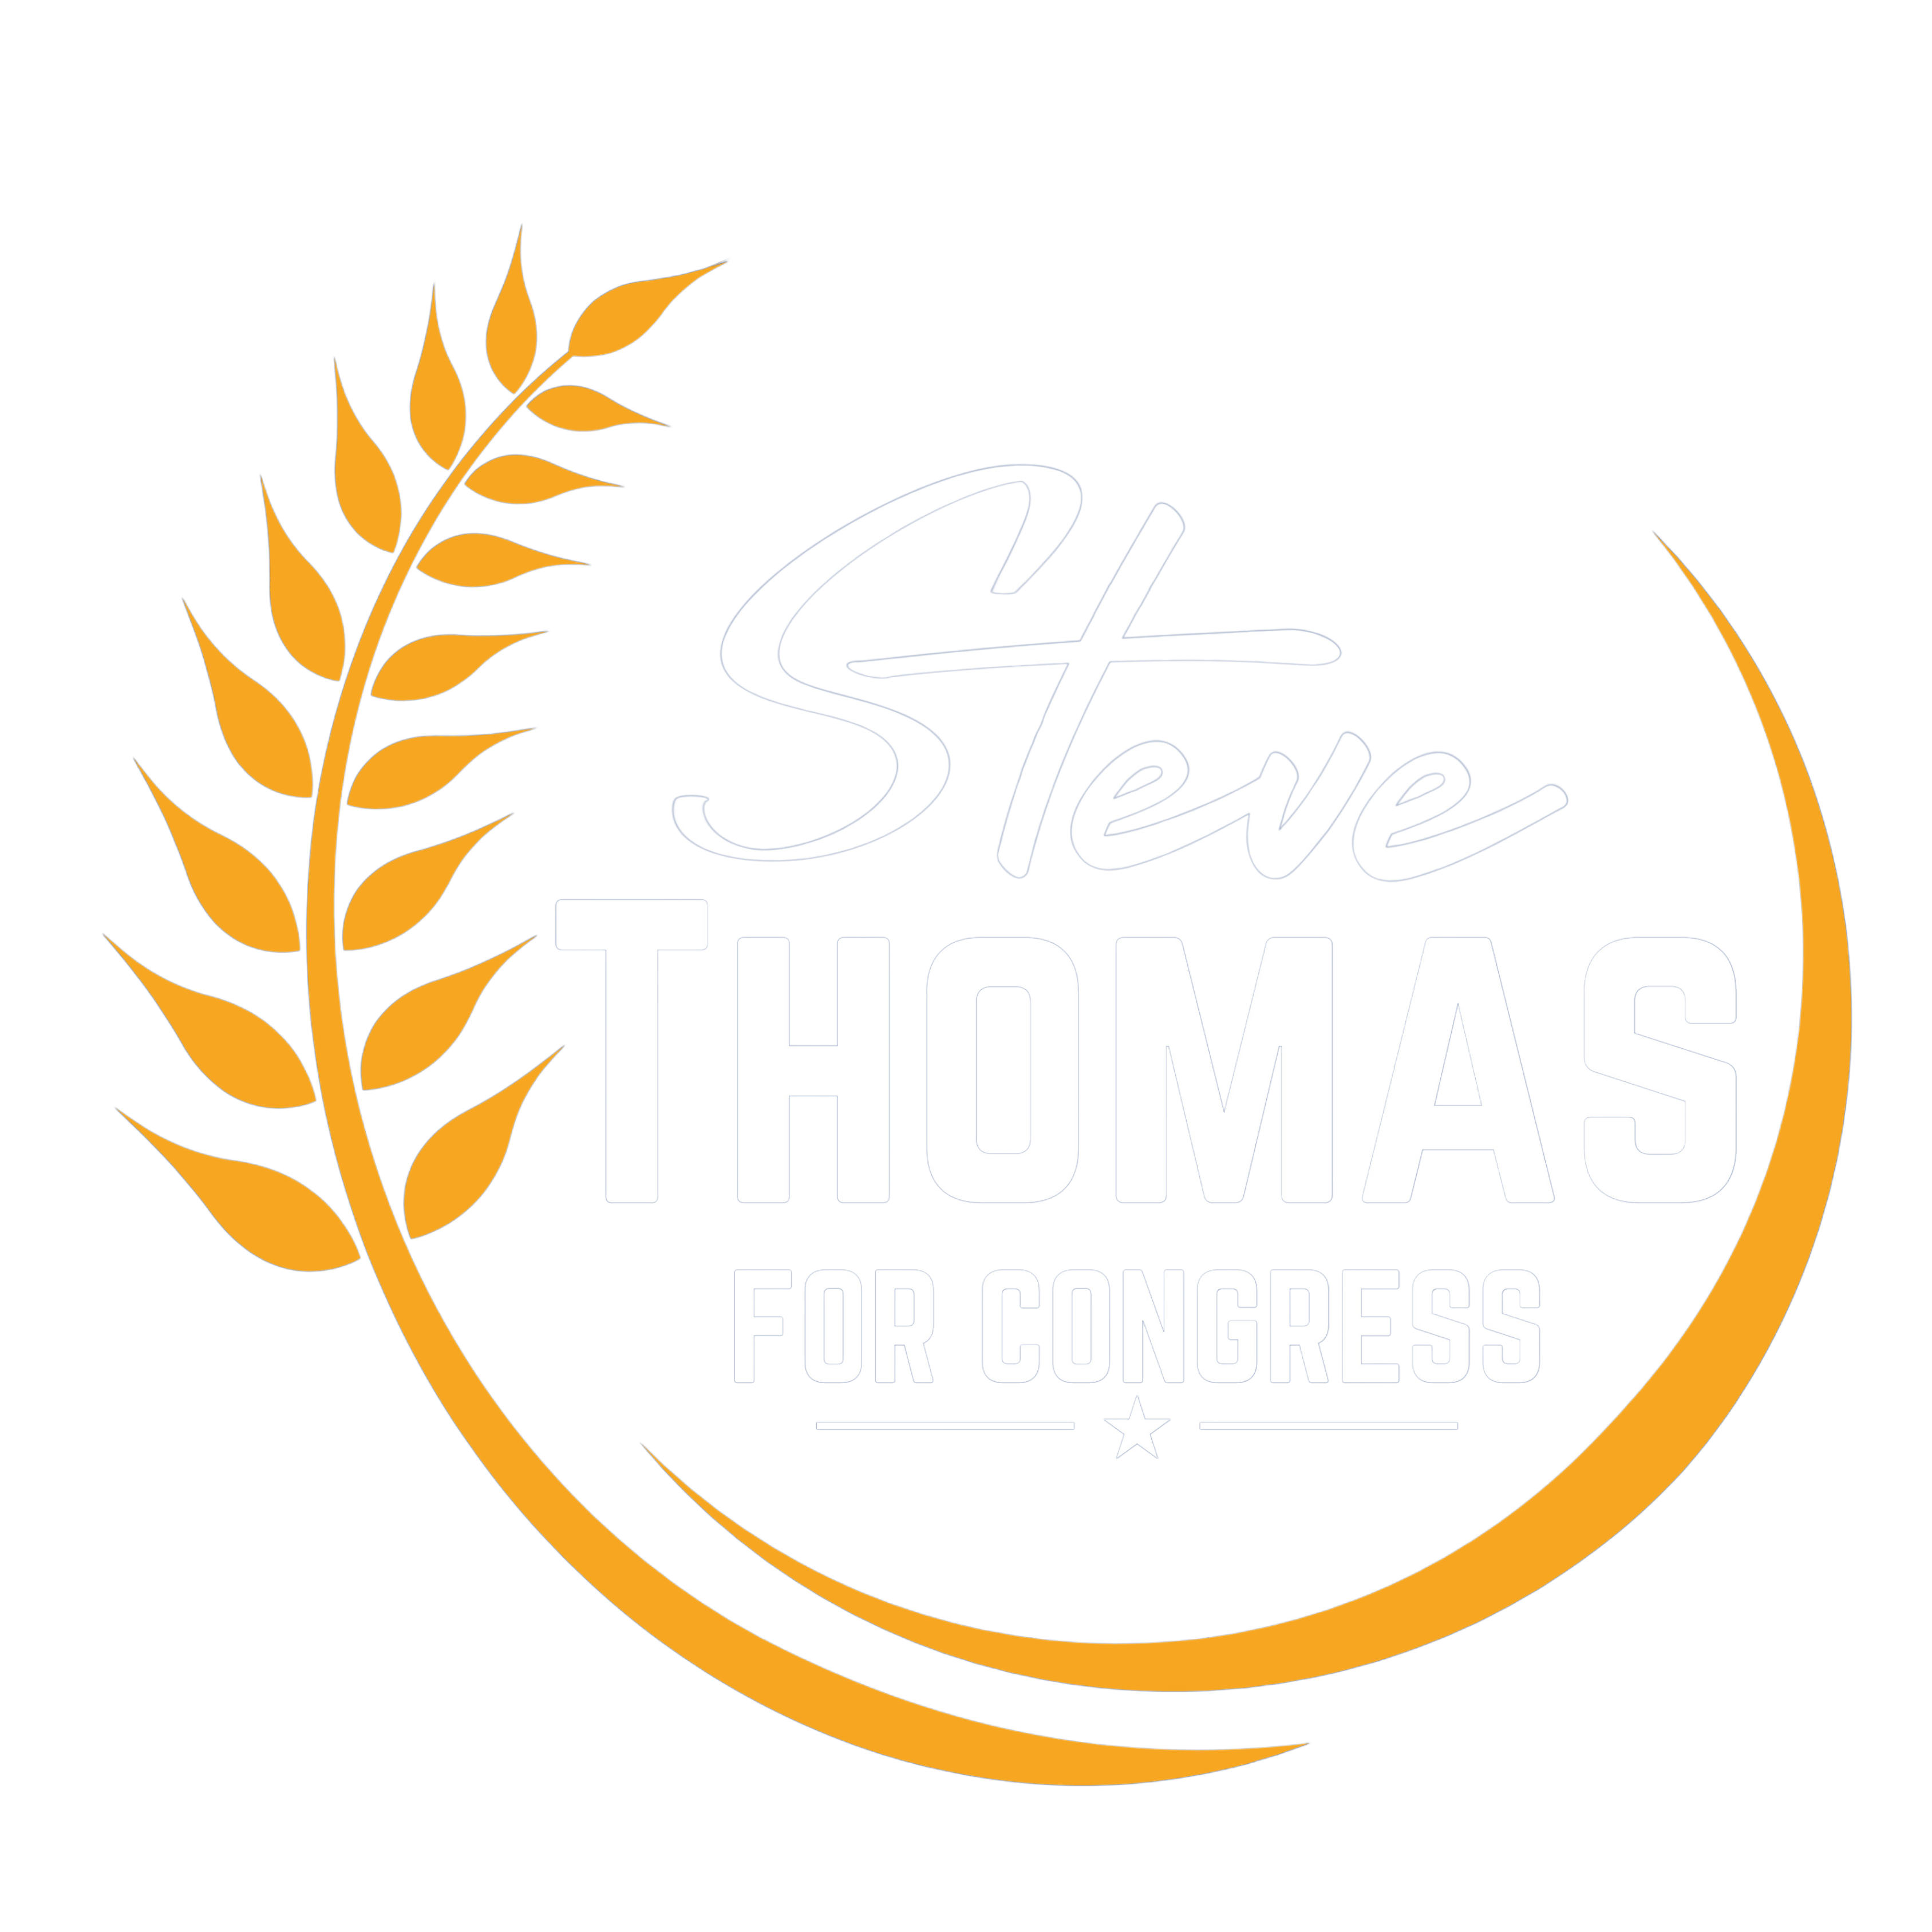 Steve Thomas for Congress